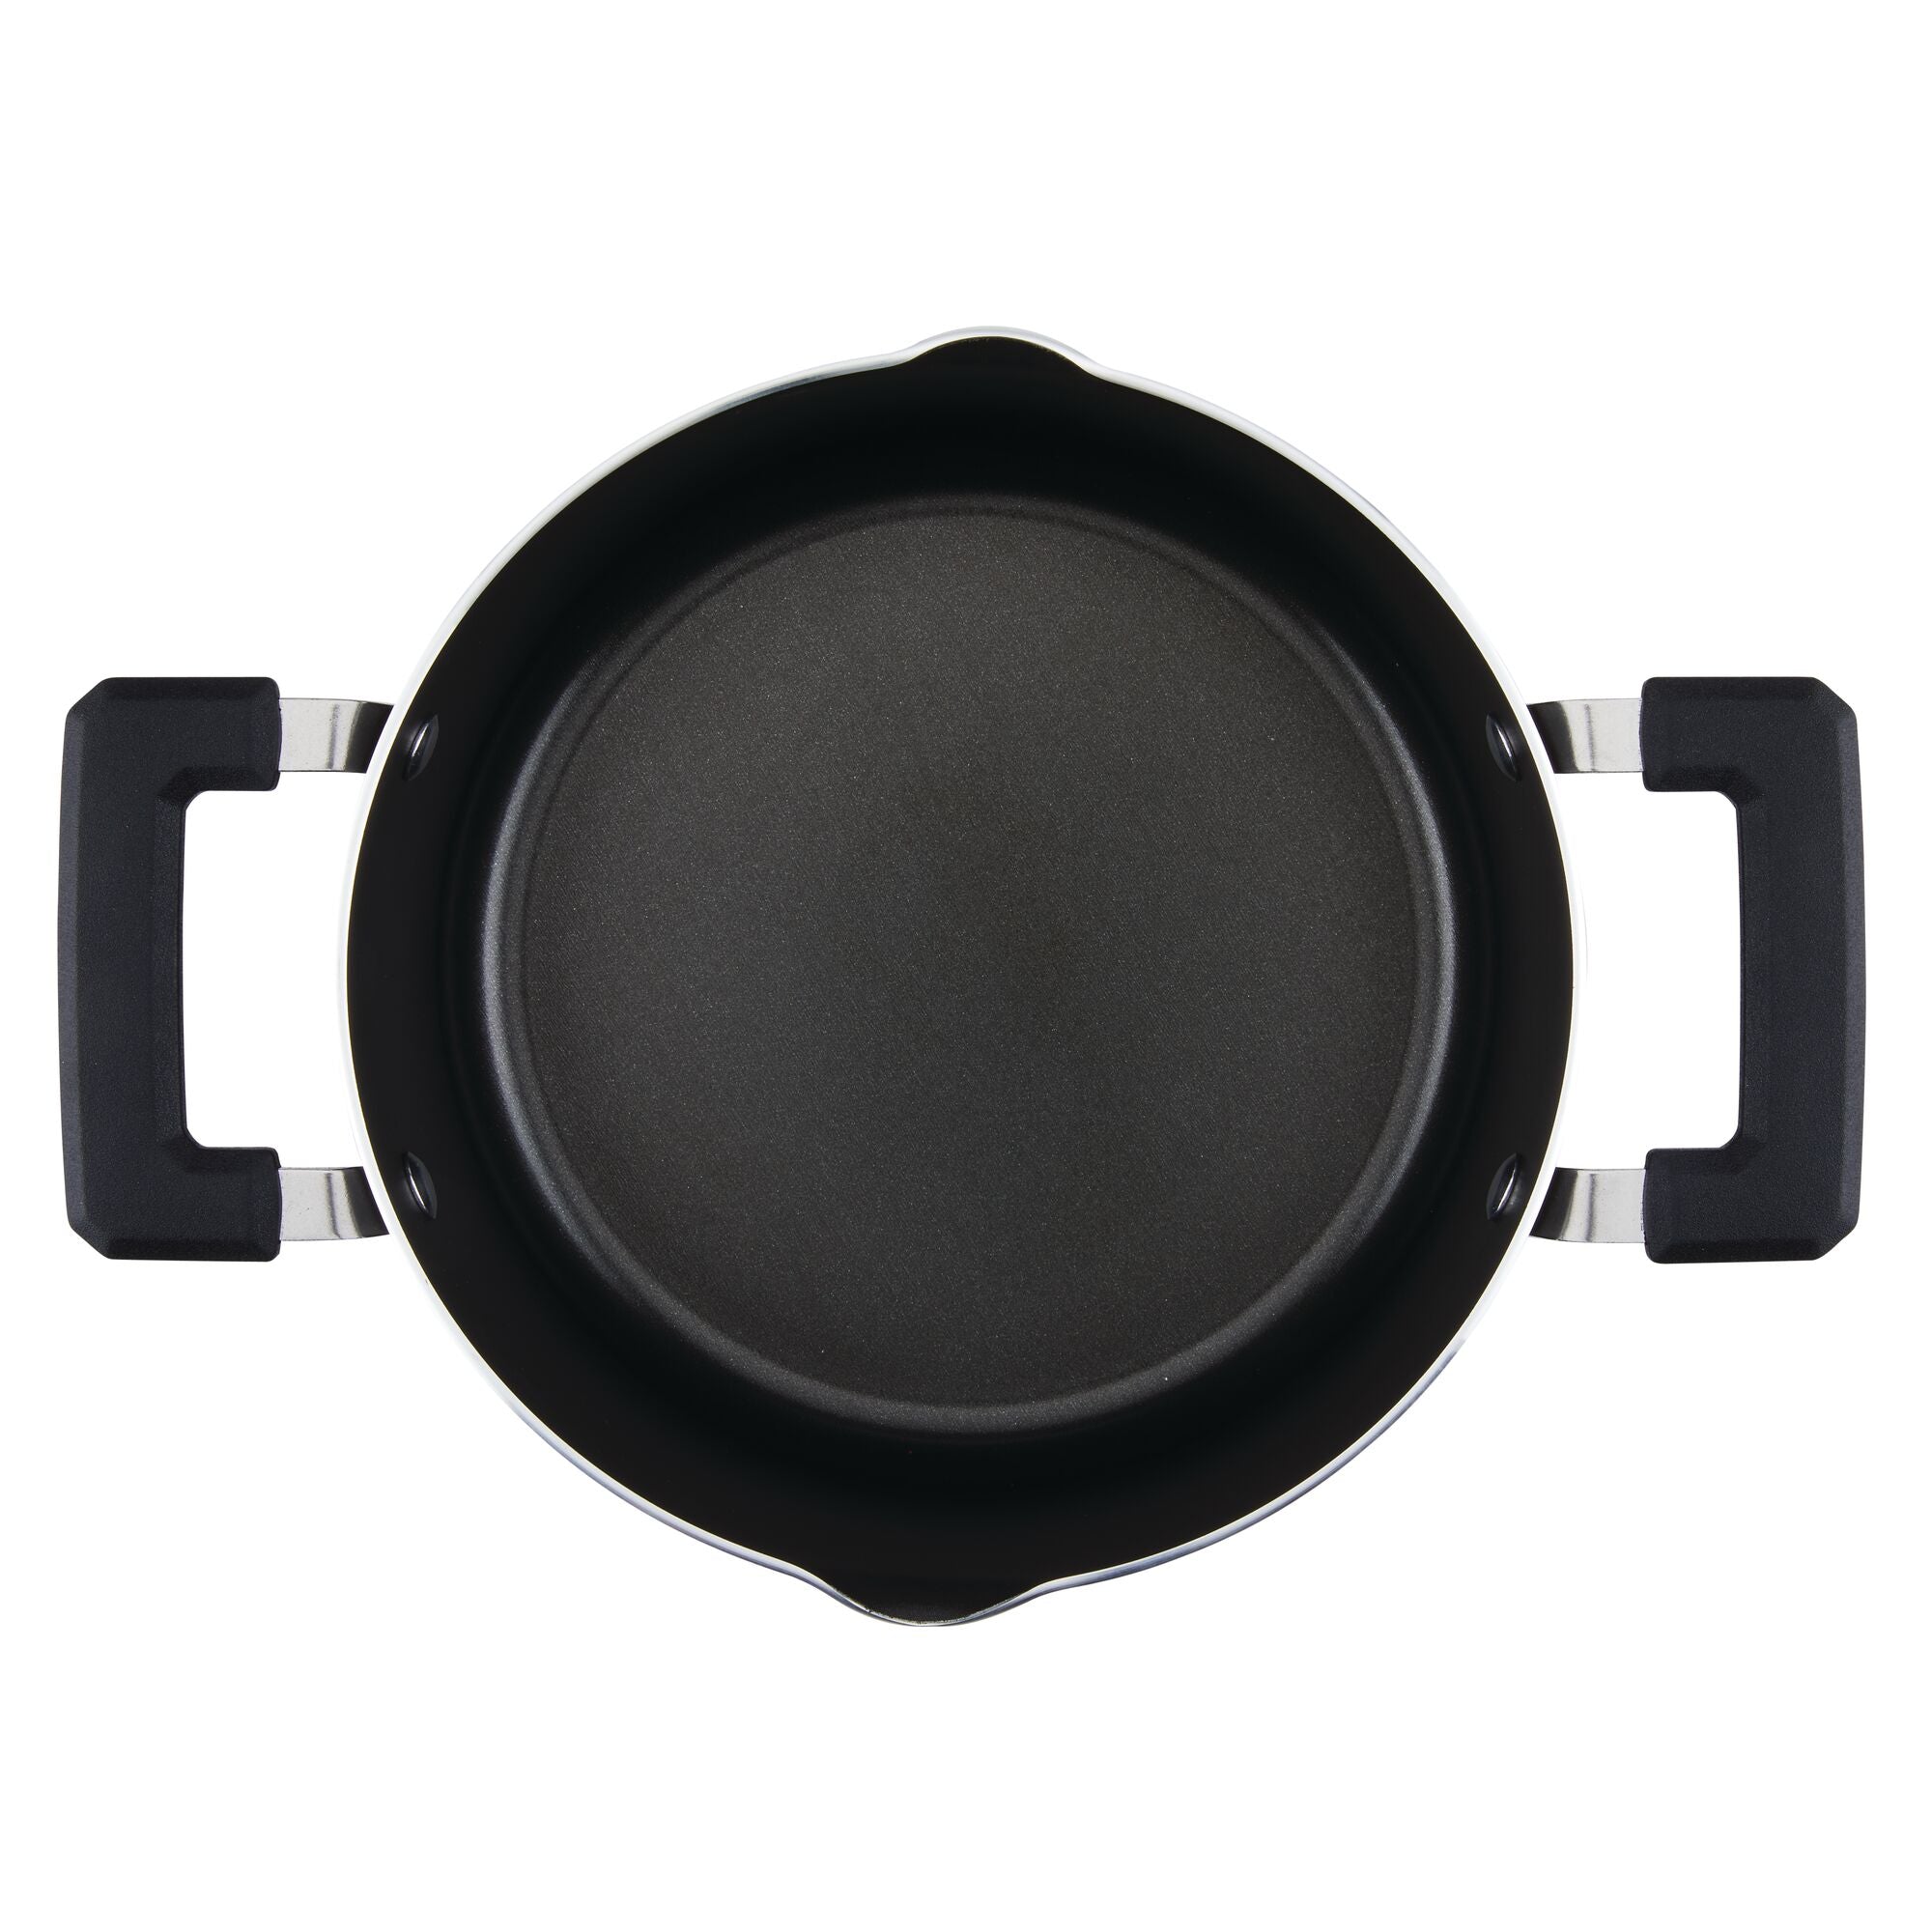 Farberware 6 Quart Black Smart Control Aluminum Nonstick Stockpot with Lid 